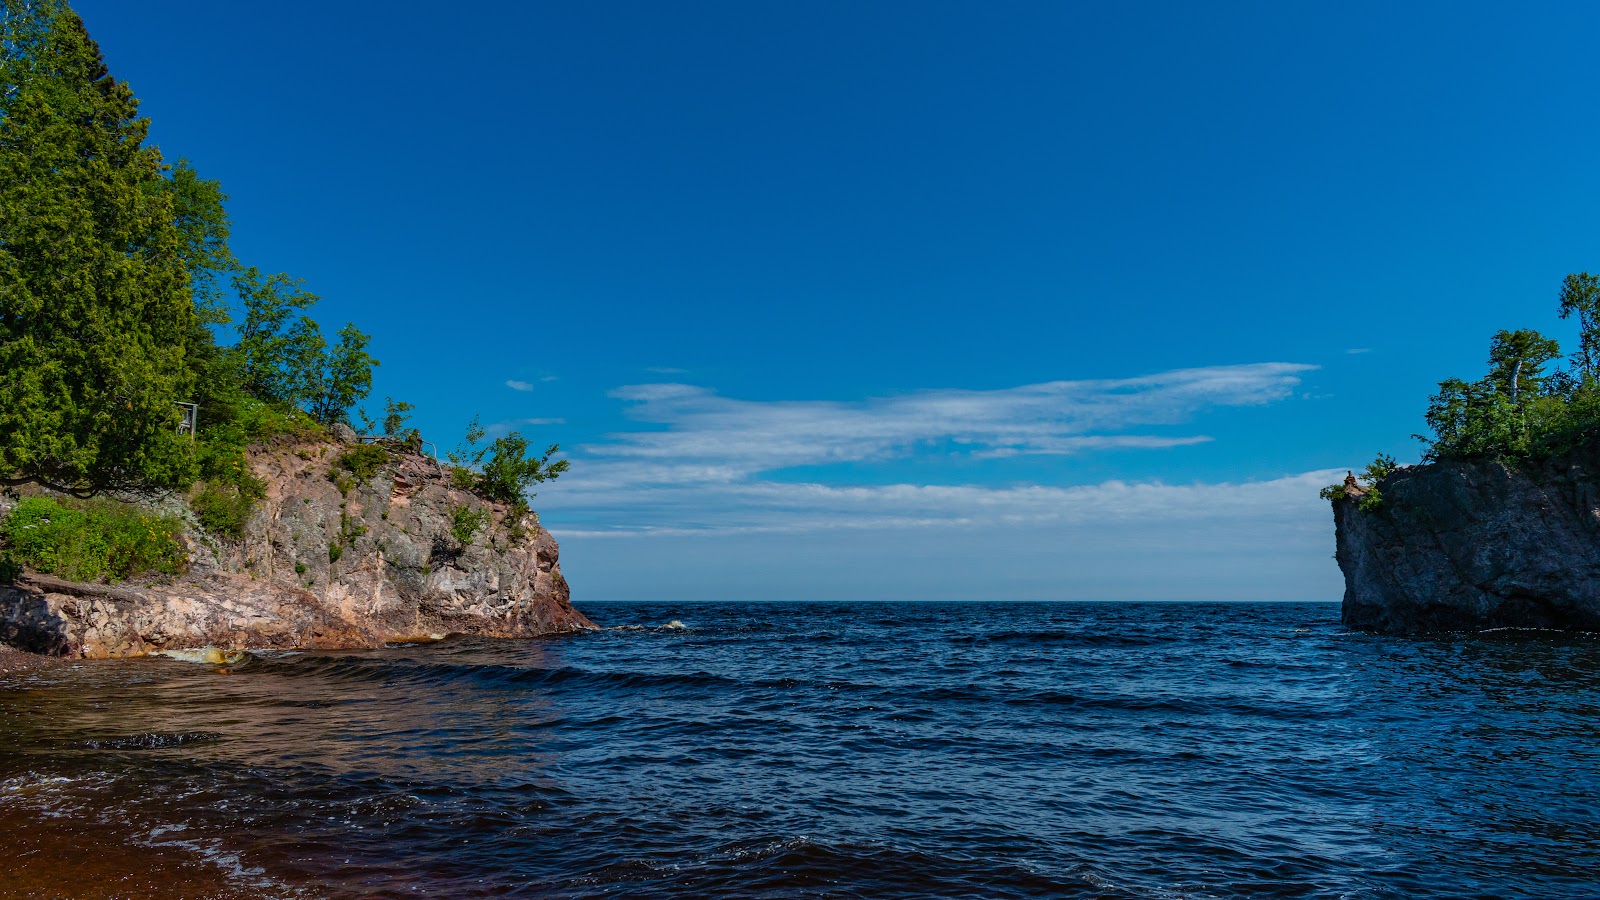 Fotografija Lake Superior Beach z prostoren zaliv